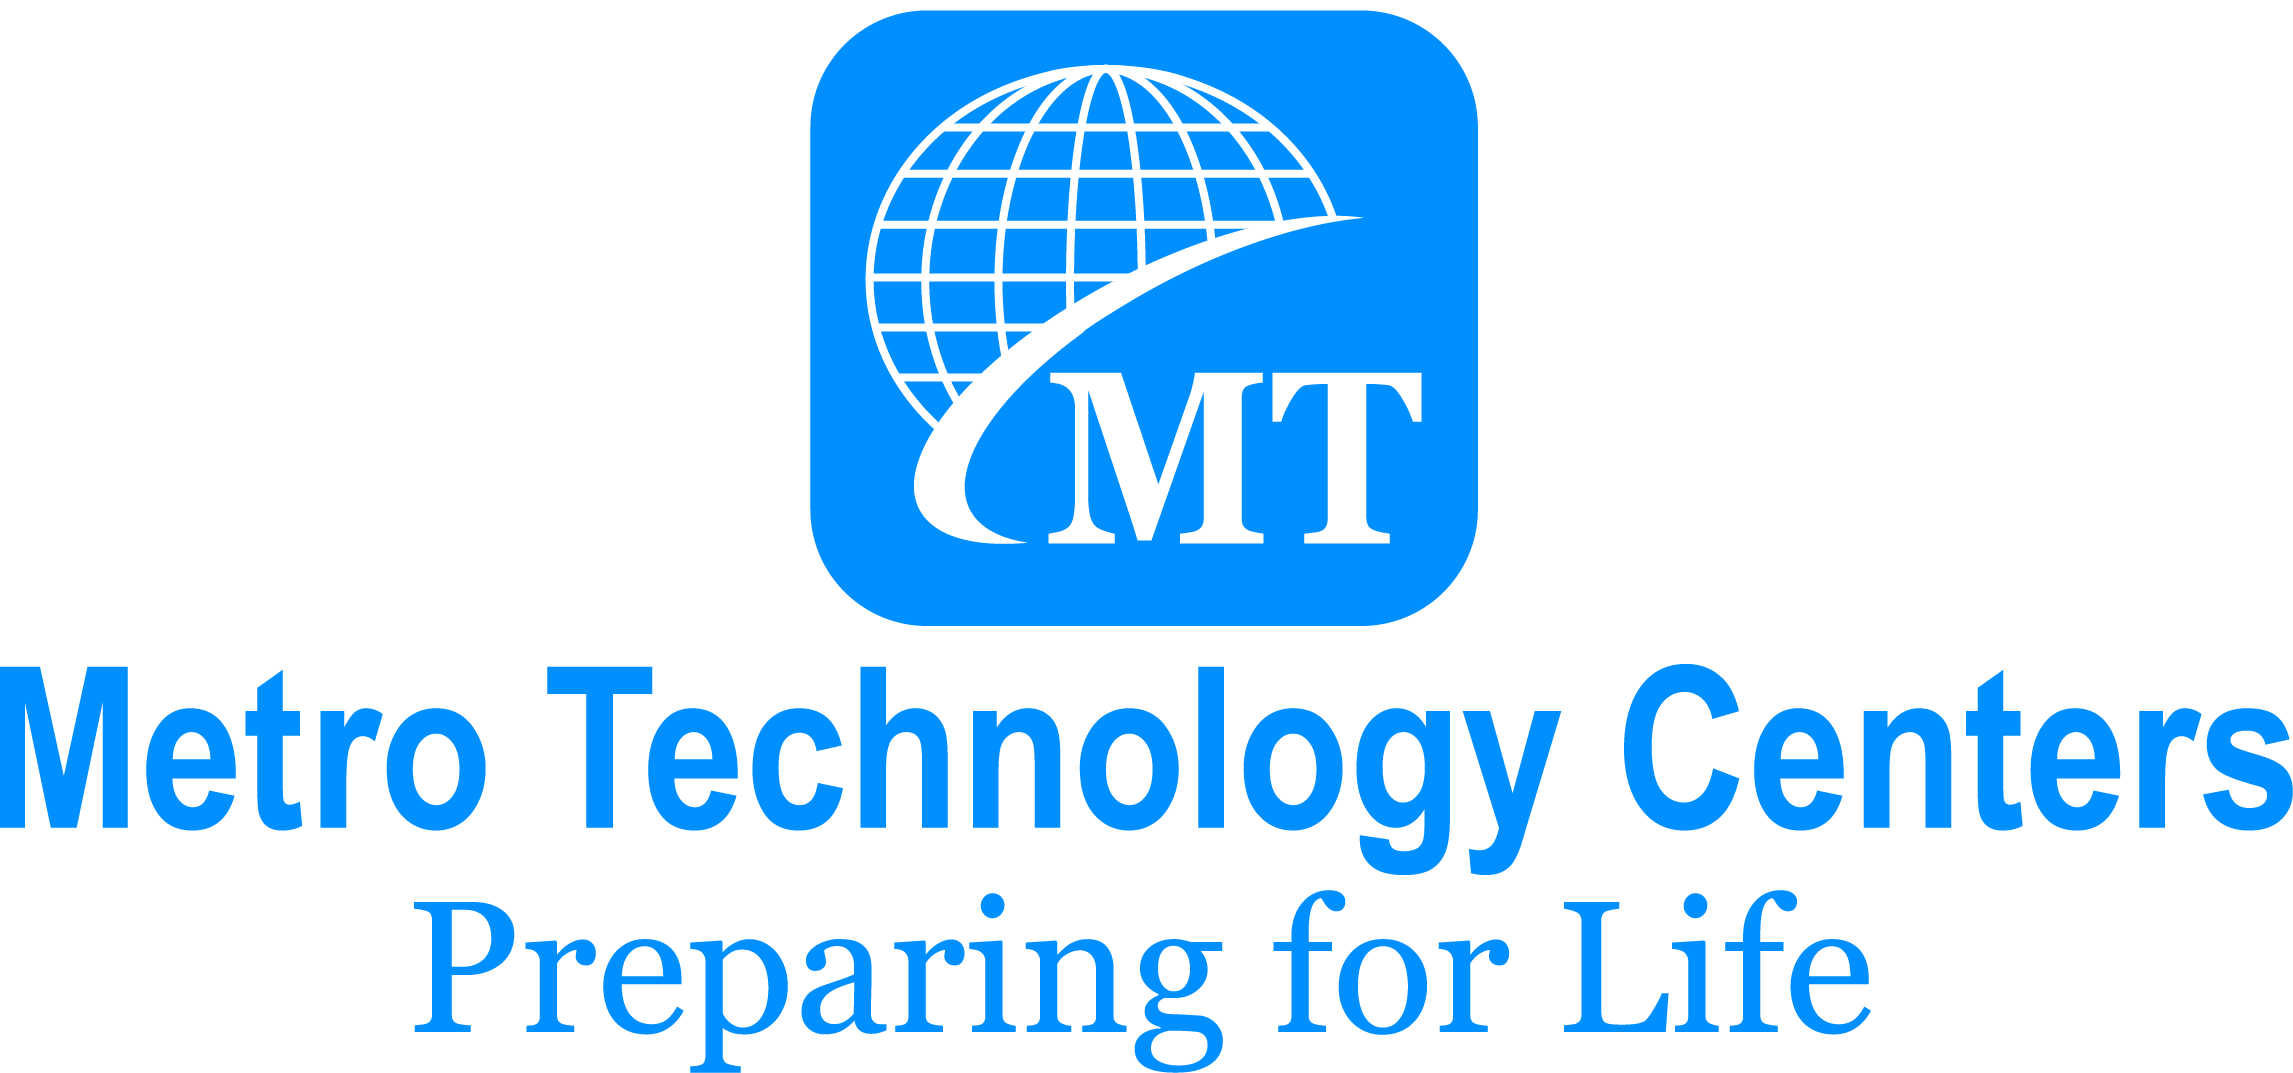 Metro Technology Center